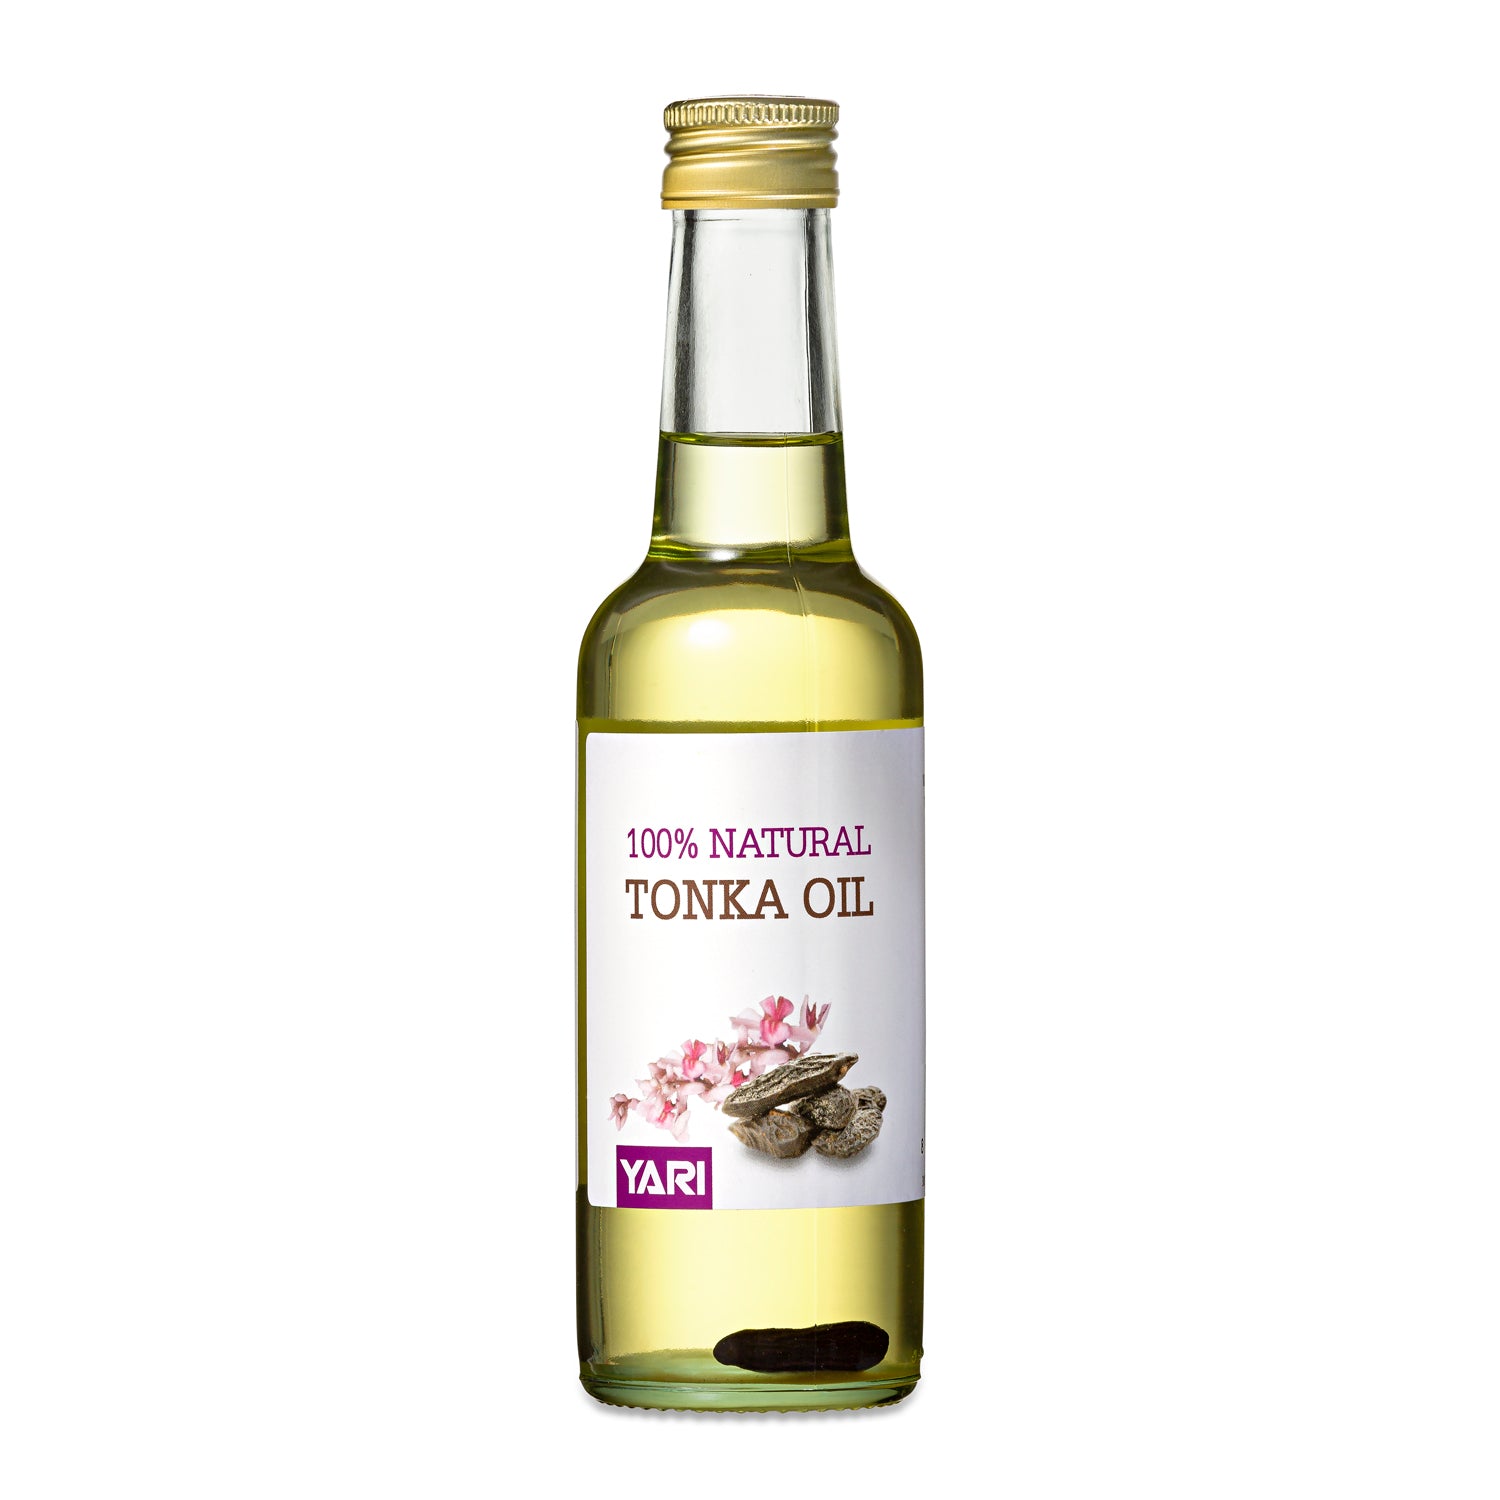 Yari - 100% Natural Tonka Oil 250ml